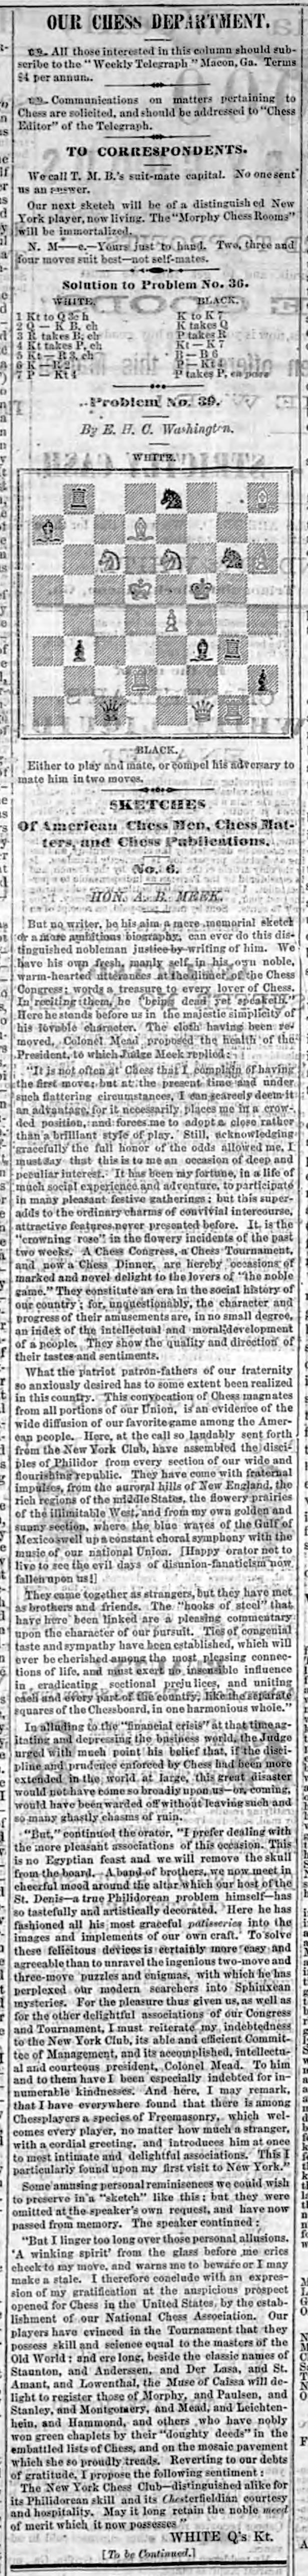 1867.05.24-01 Macon Georgia Weekly Telegraph.jpg